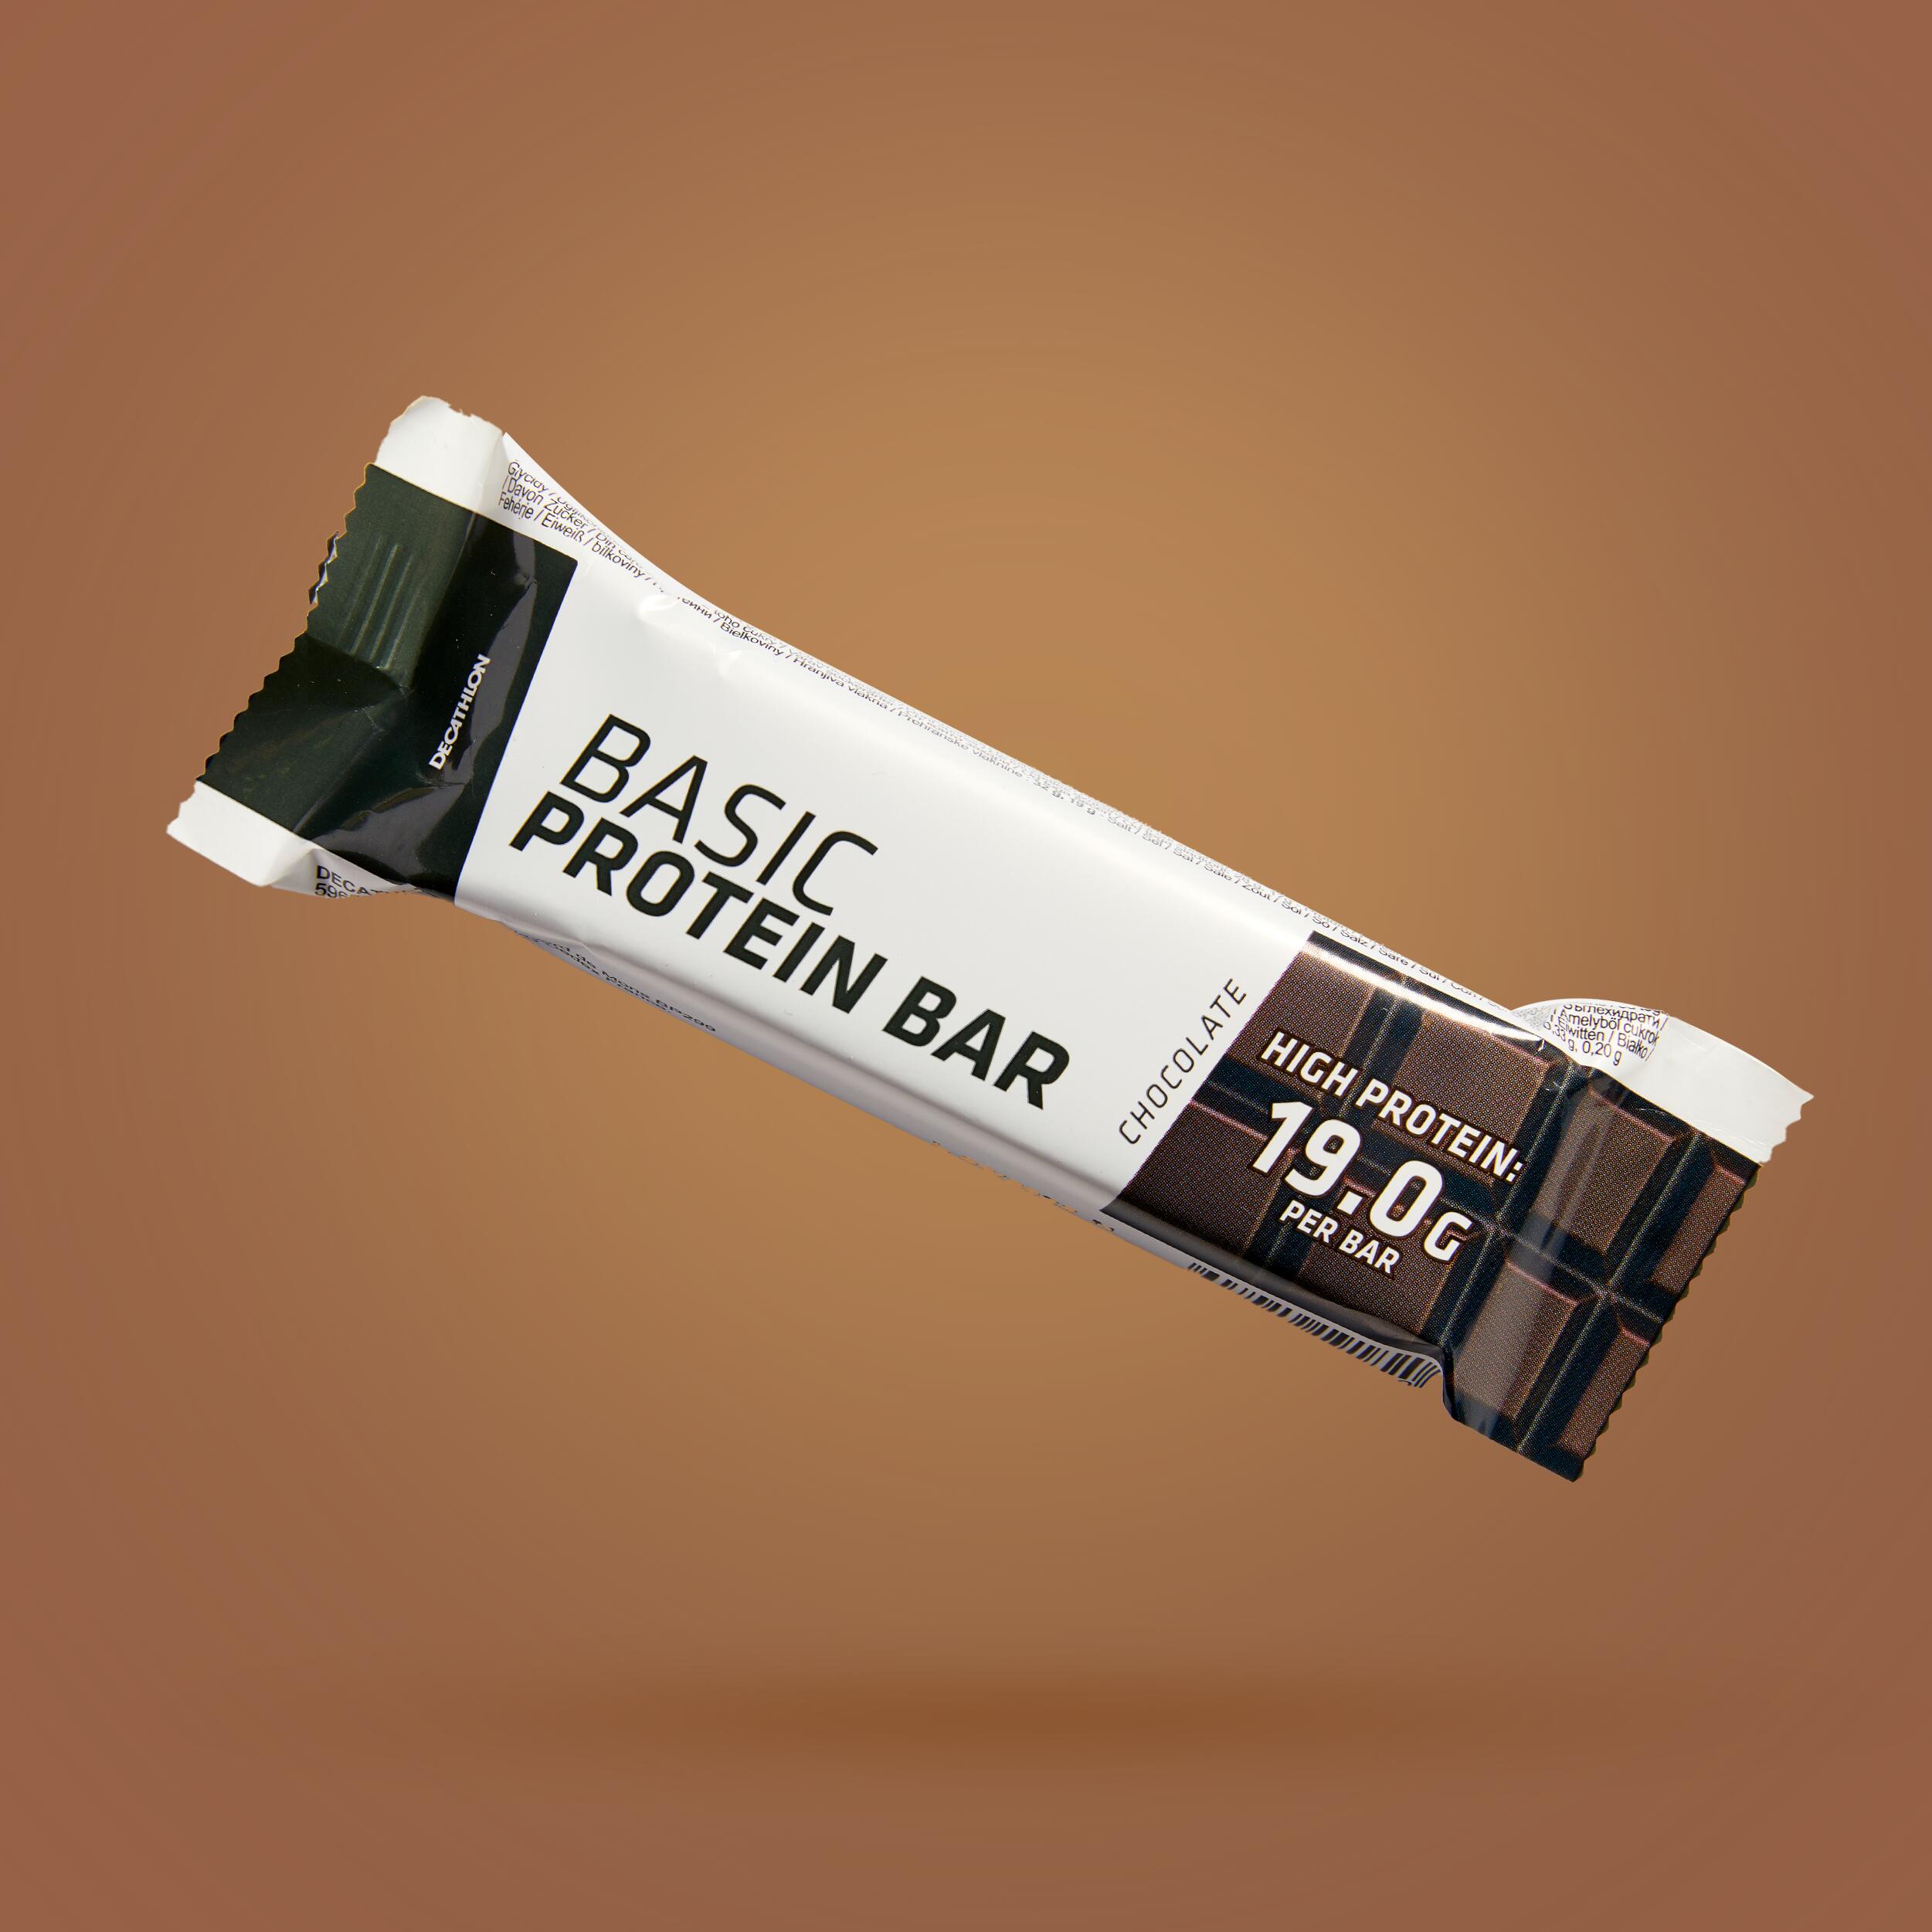 Baton proteine BASIC decathlon.ro